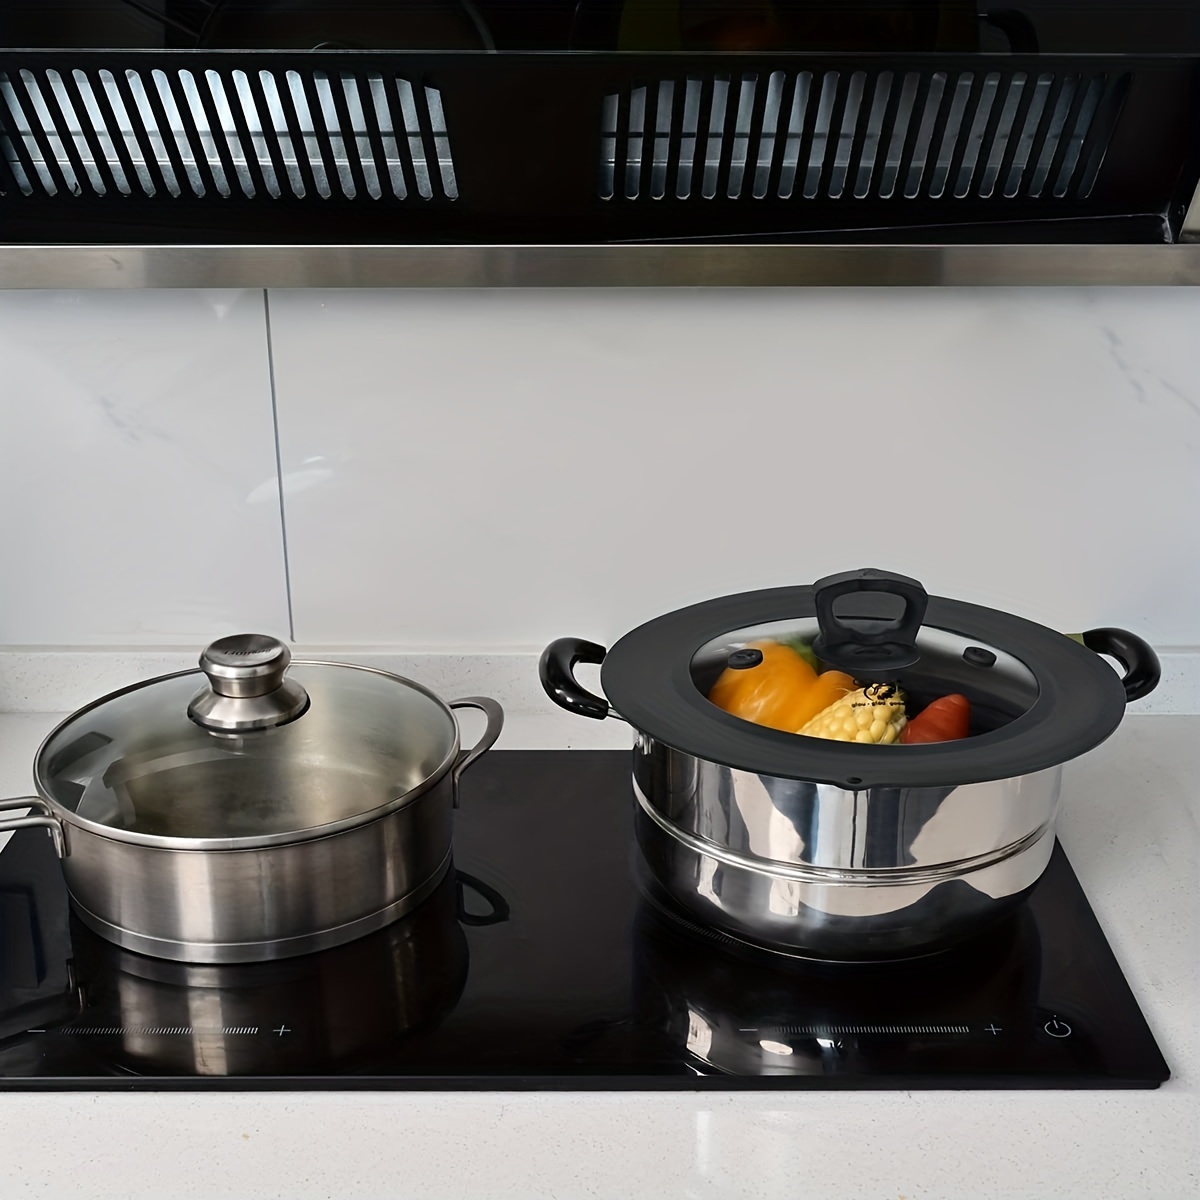 Tapa universal grande, se adapta a utensilios de cocina de 8 a 12 pulgadas,  parte superior de vidrio templado con ventilación de vapor para ollas